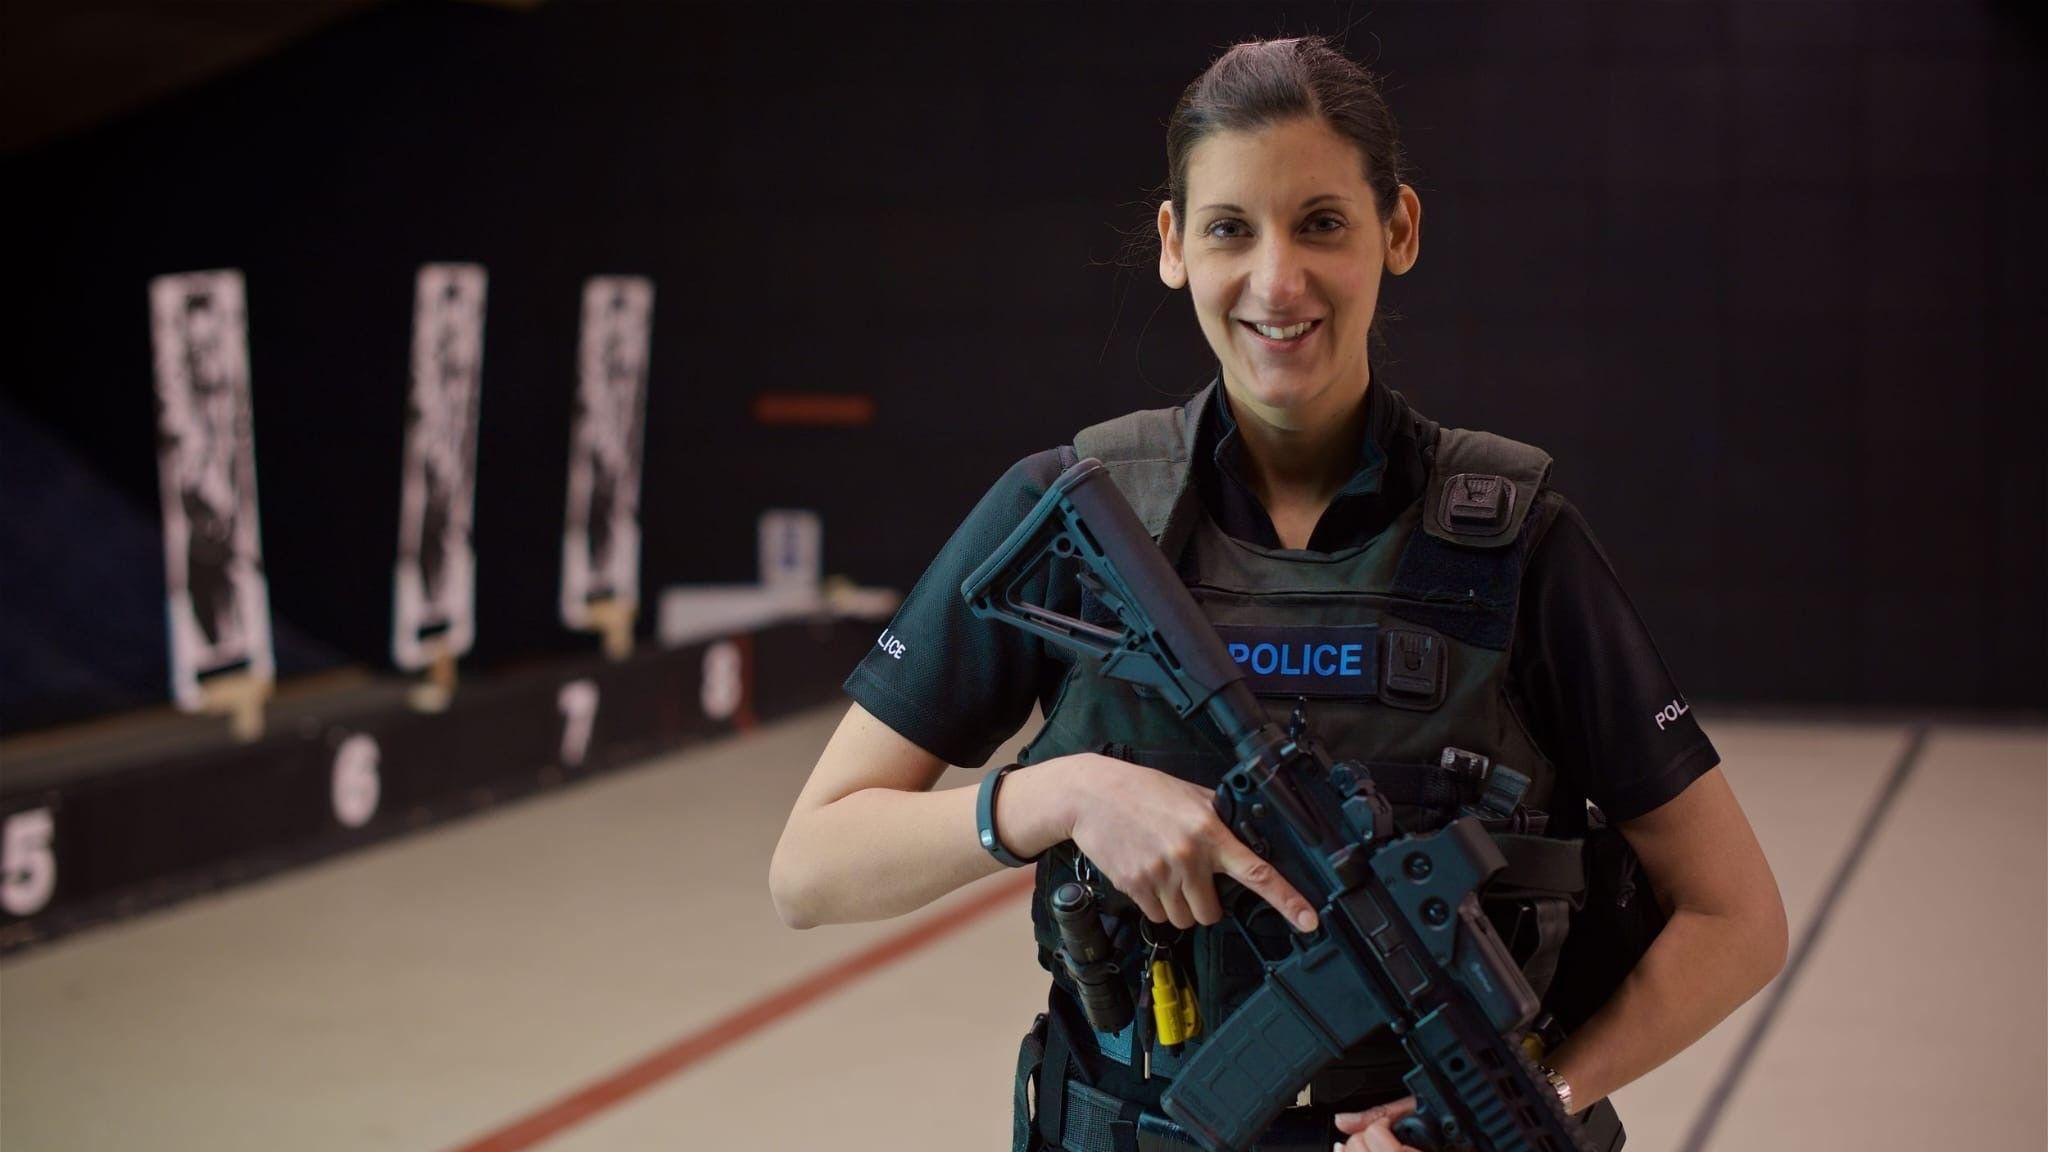 Rebecca Kalam in her firearms uniform